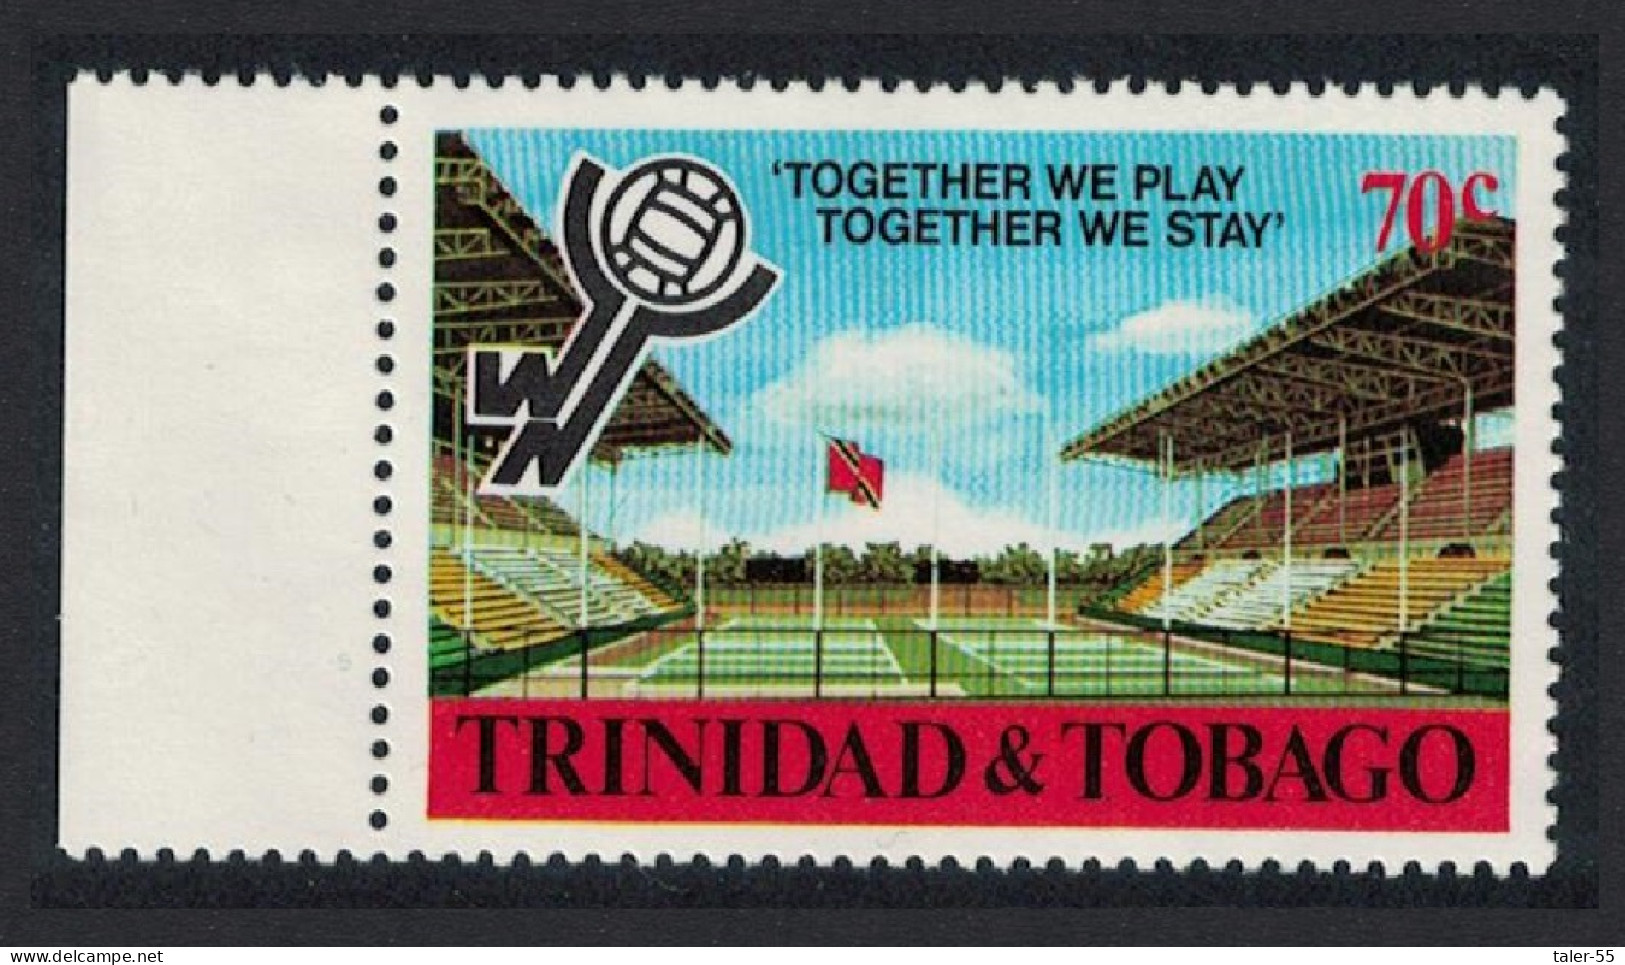 Trinidad And Tobago World Netball Tournament Left Margin 1980 MNH SG#580 - Trinidad & Tobago (1962-...)